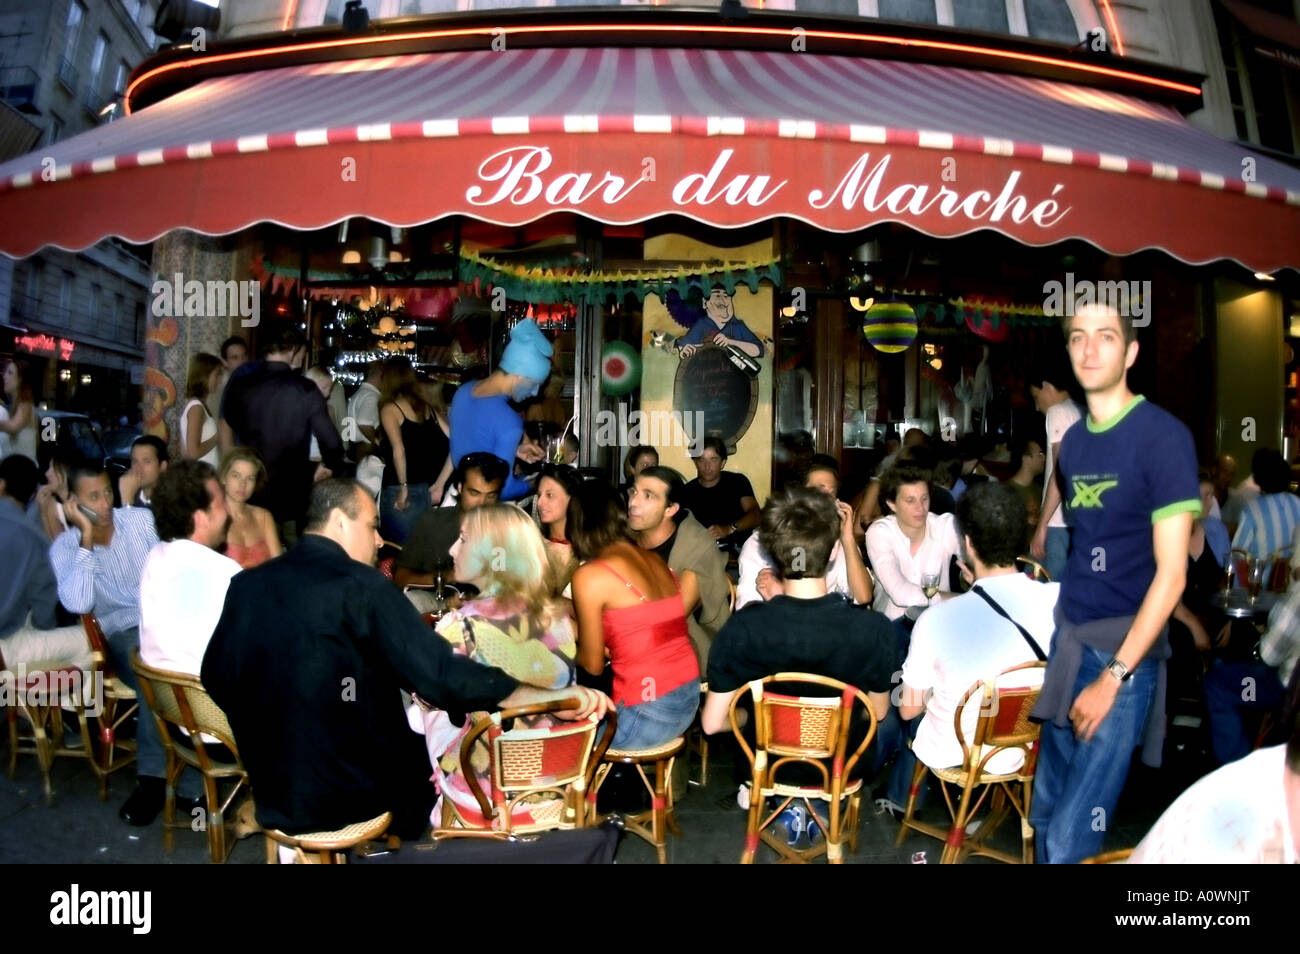 PARIS, France, Crowd People Sharing Drinks on Sidewalk Terrace Paris French Café Bar Bistro Restaurant in Latin Quarter 'Bar de Marché' Stock Photo